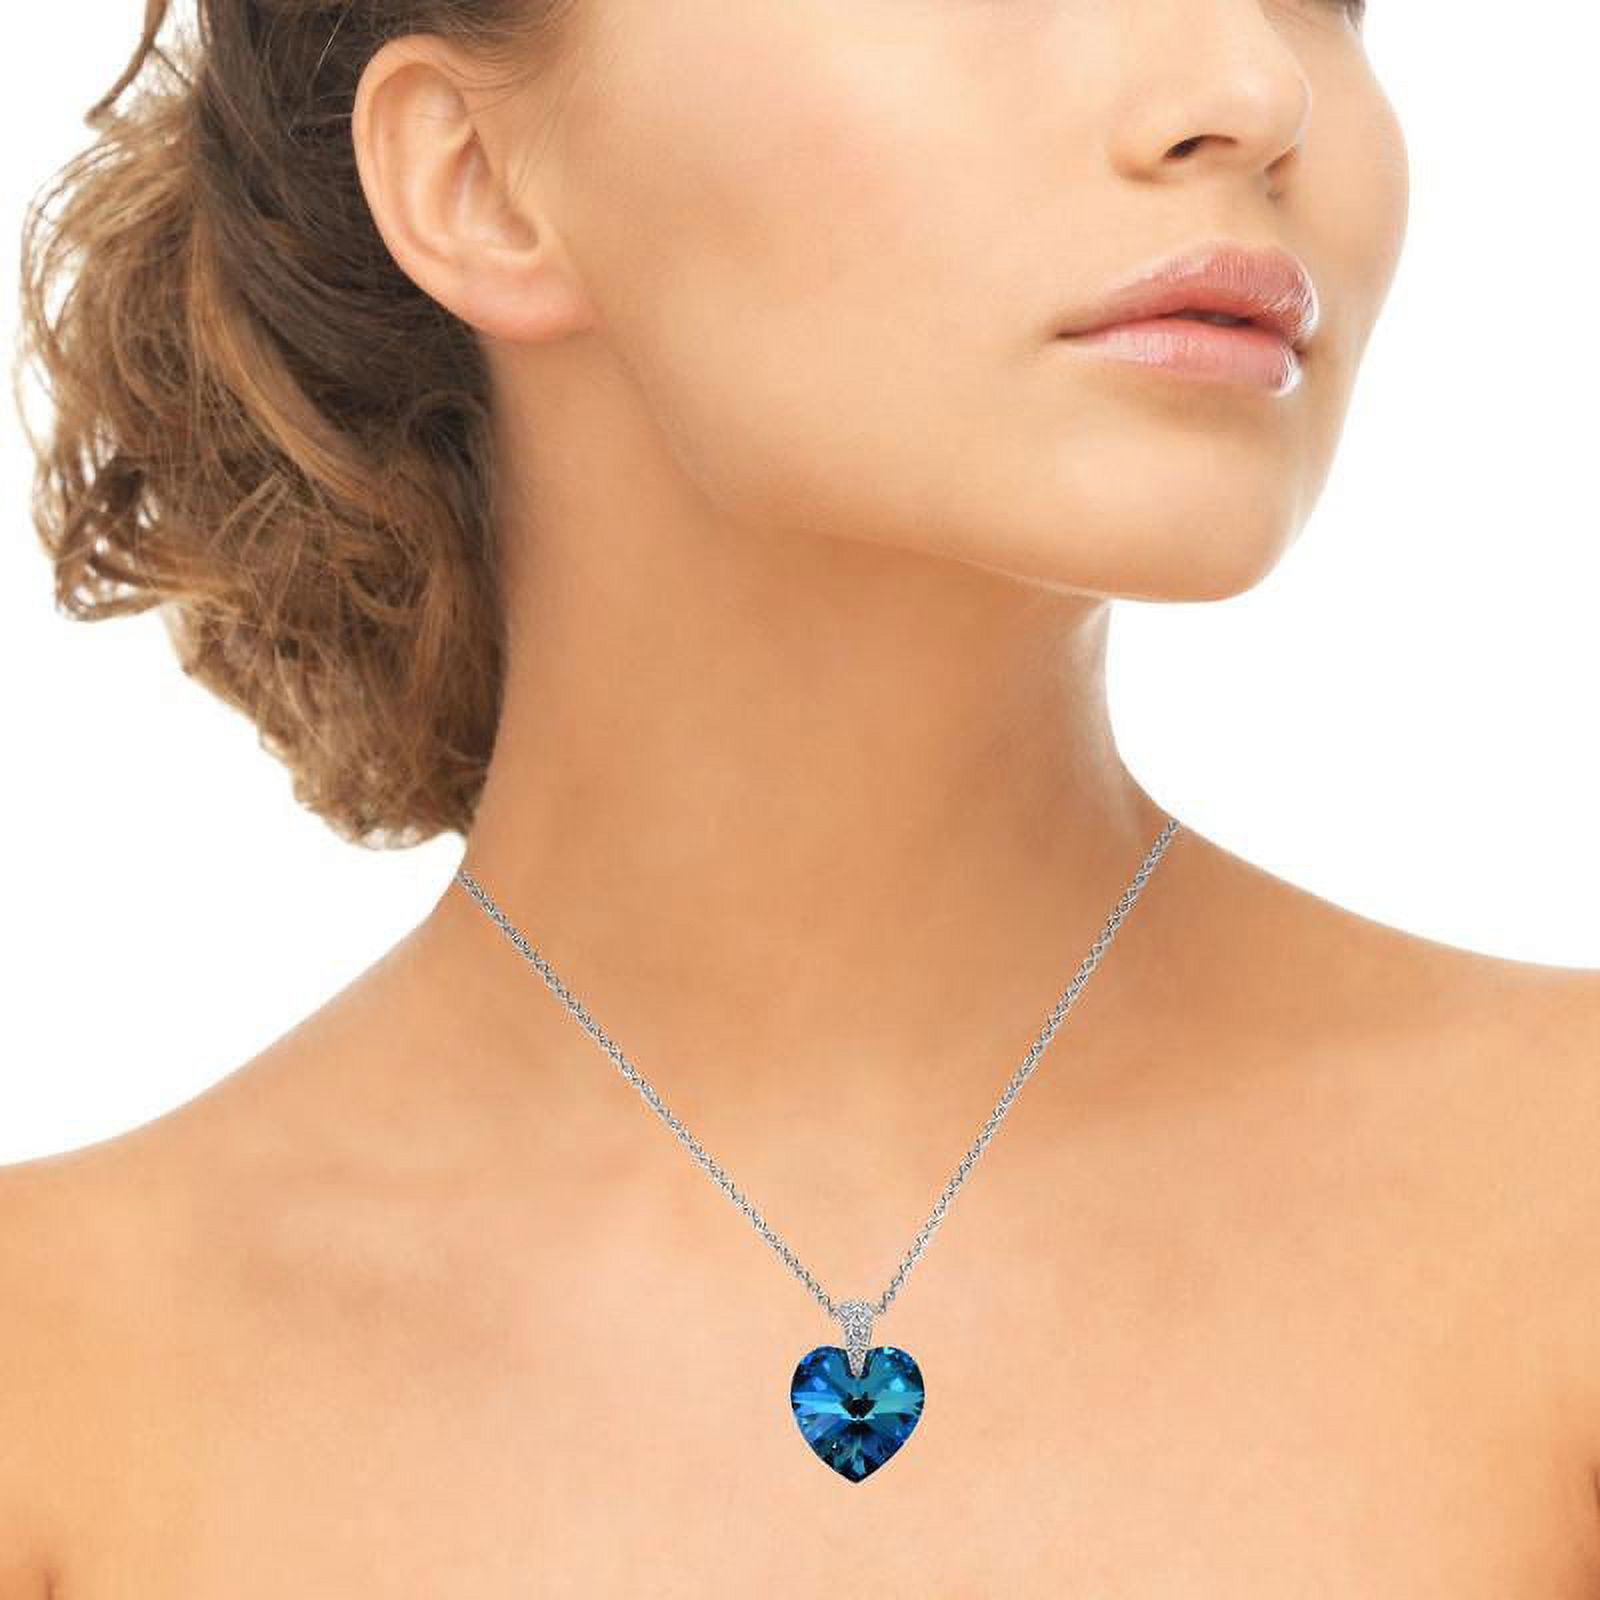 NEW Swarovski One pendant Heart Blue Rhodium plated Necklace 5511541 | eBay